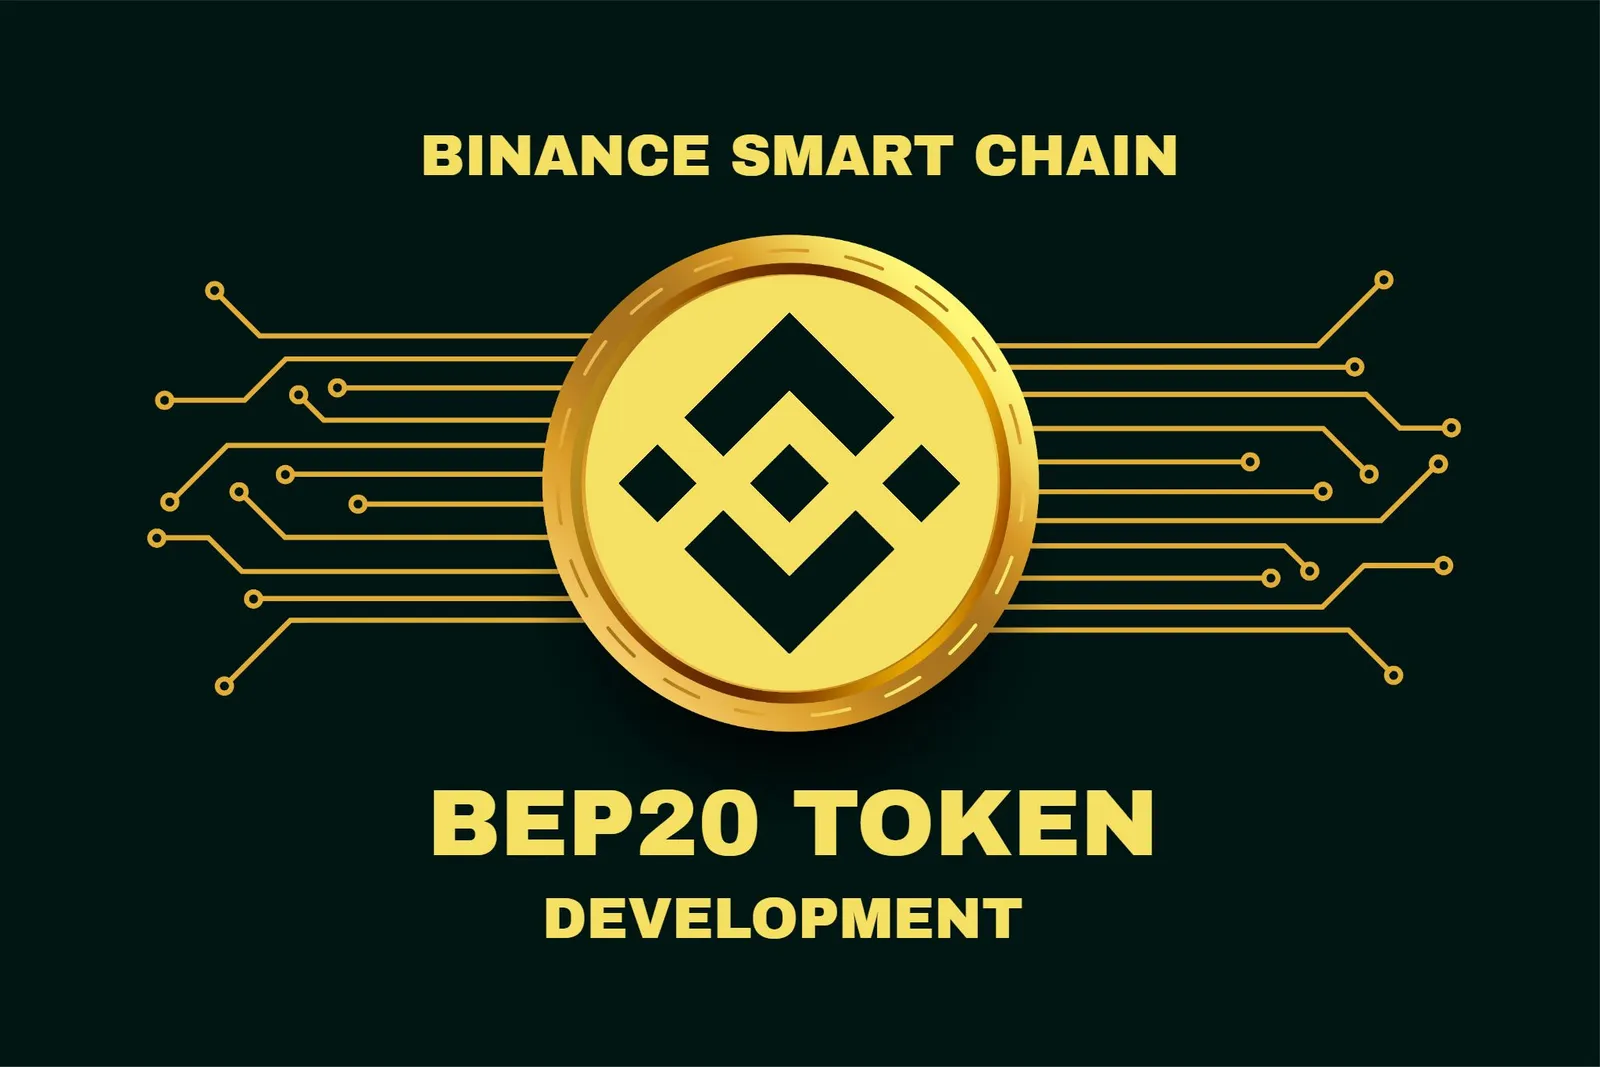 BEP20 Token Development company